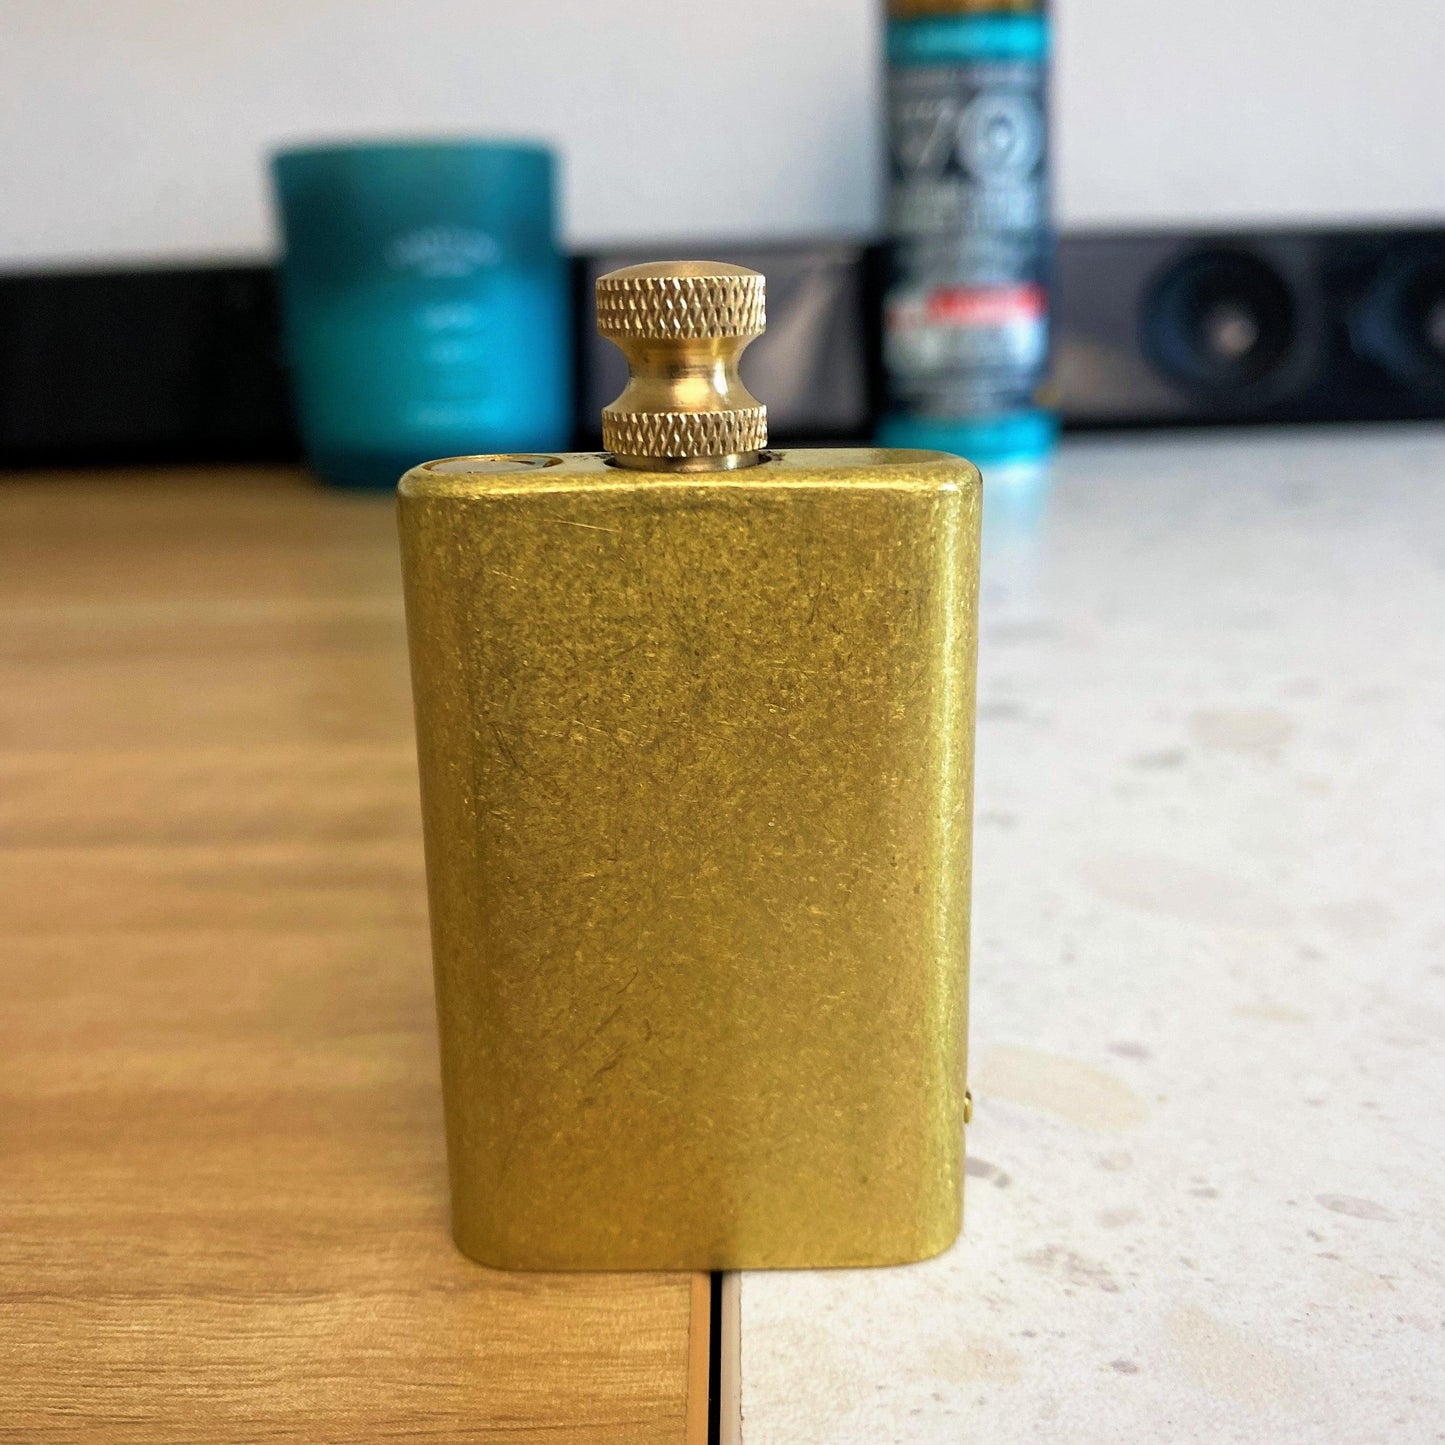 Lighter with Match Stick Design